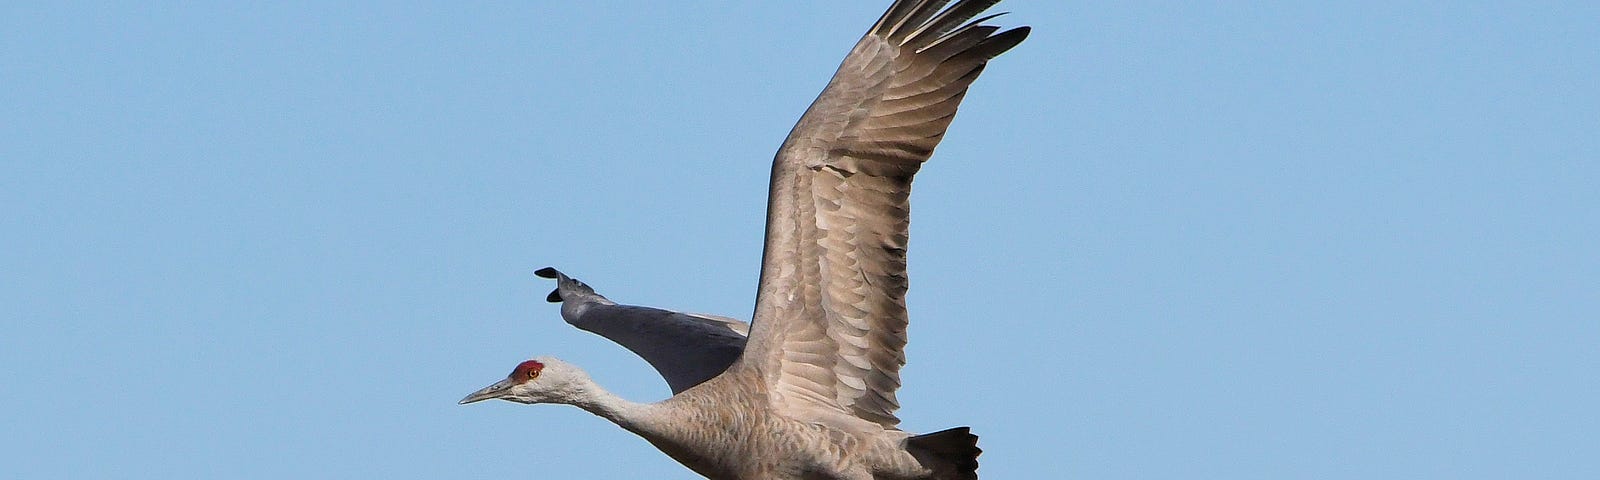 A flying sandhill crane against a blue sky